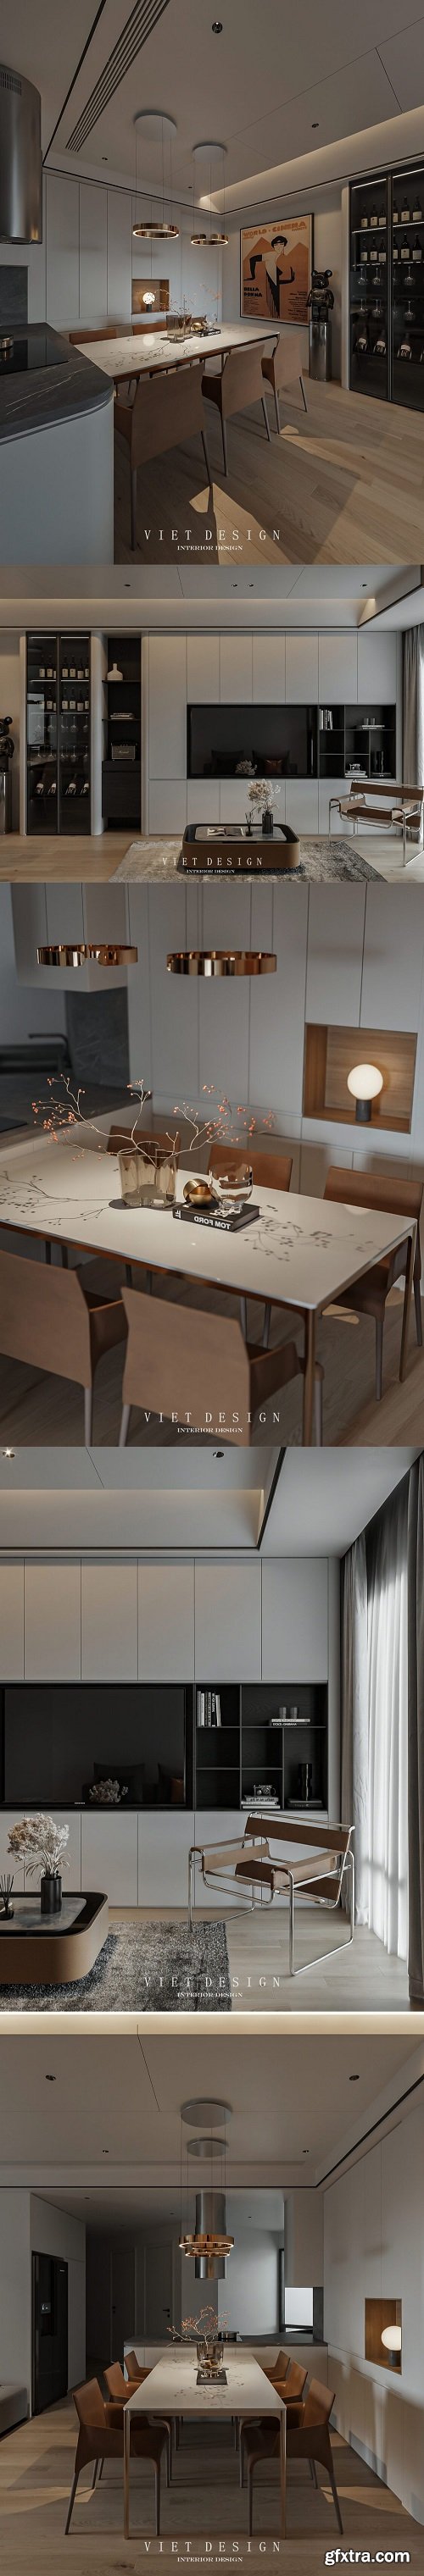 Living Room – Kitchen Interior by Hoa Tran